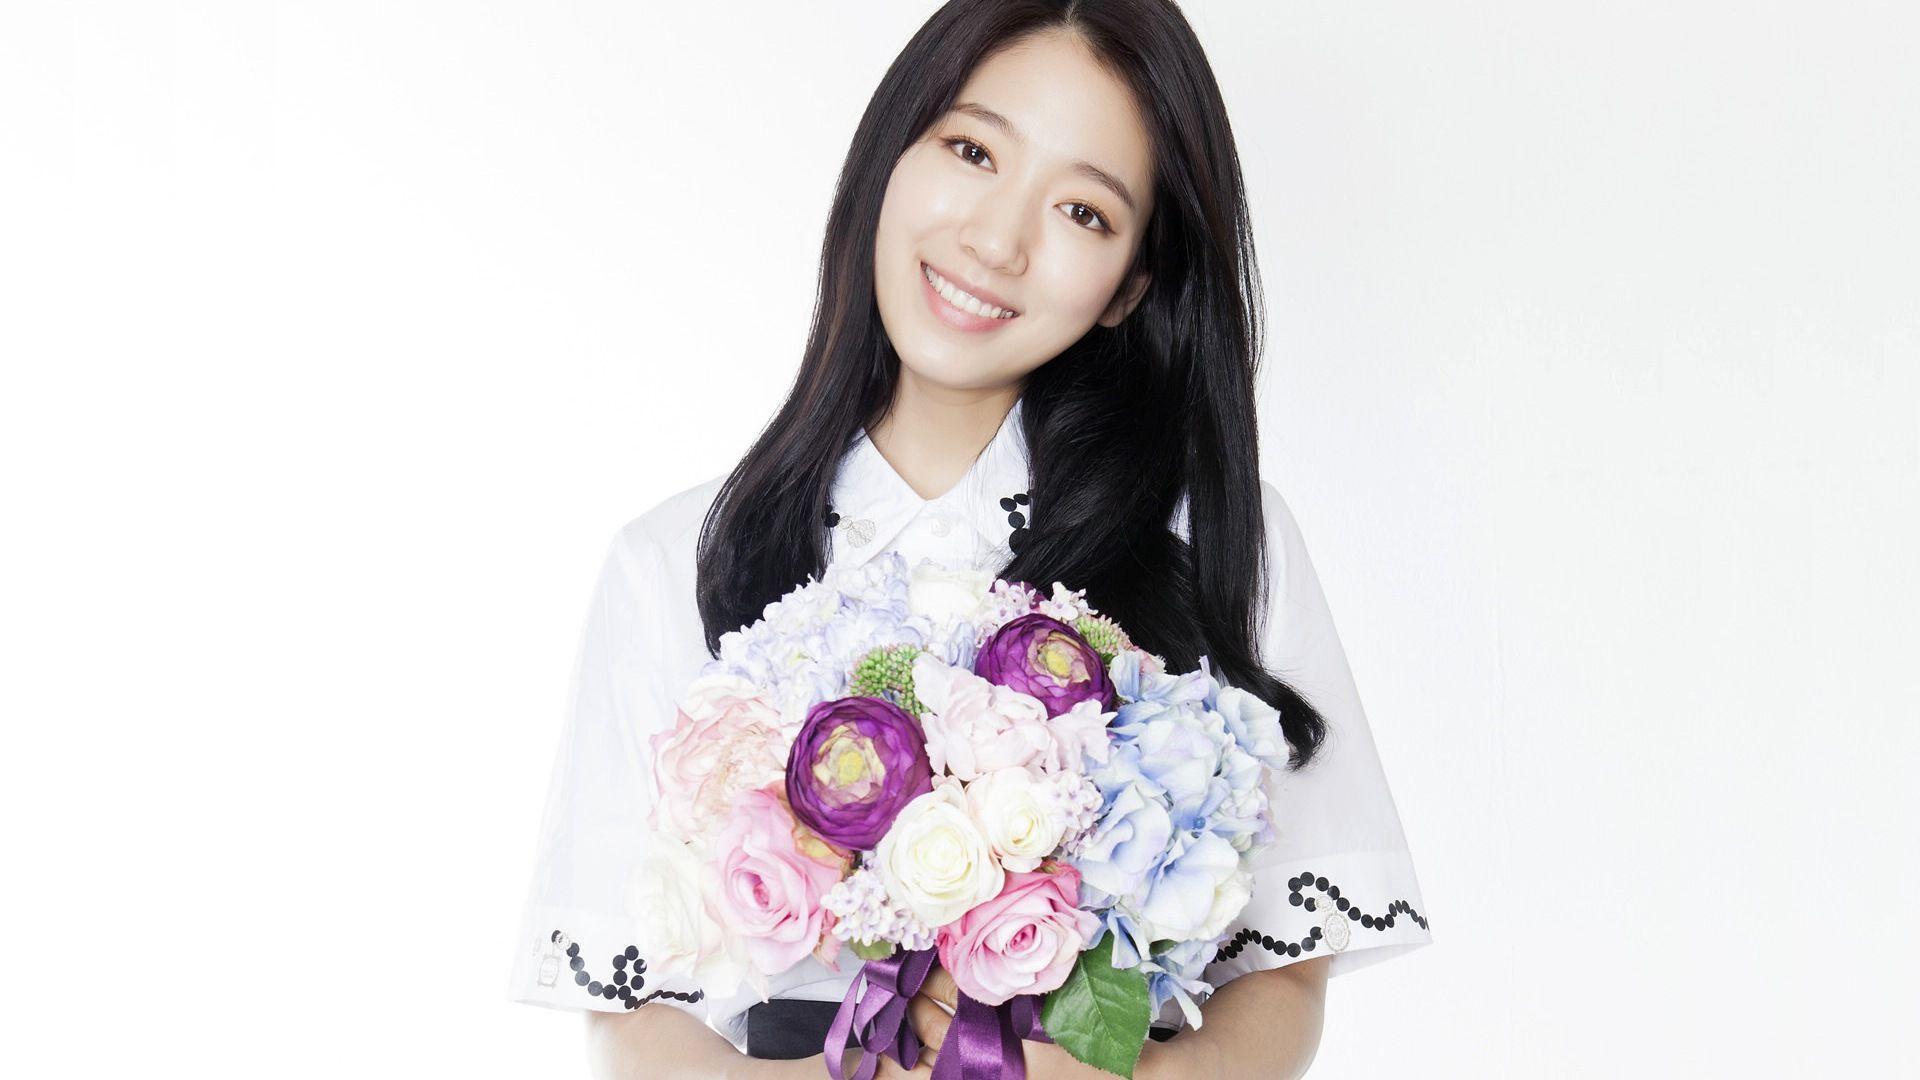 South Korean actress Park Shin Hye HD Wallpapers